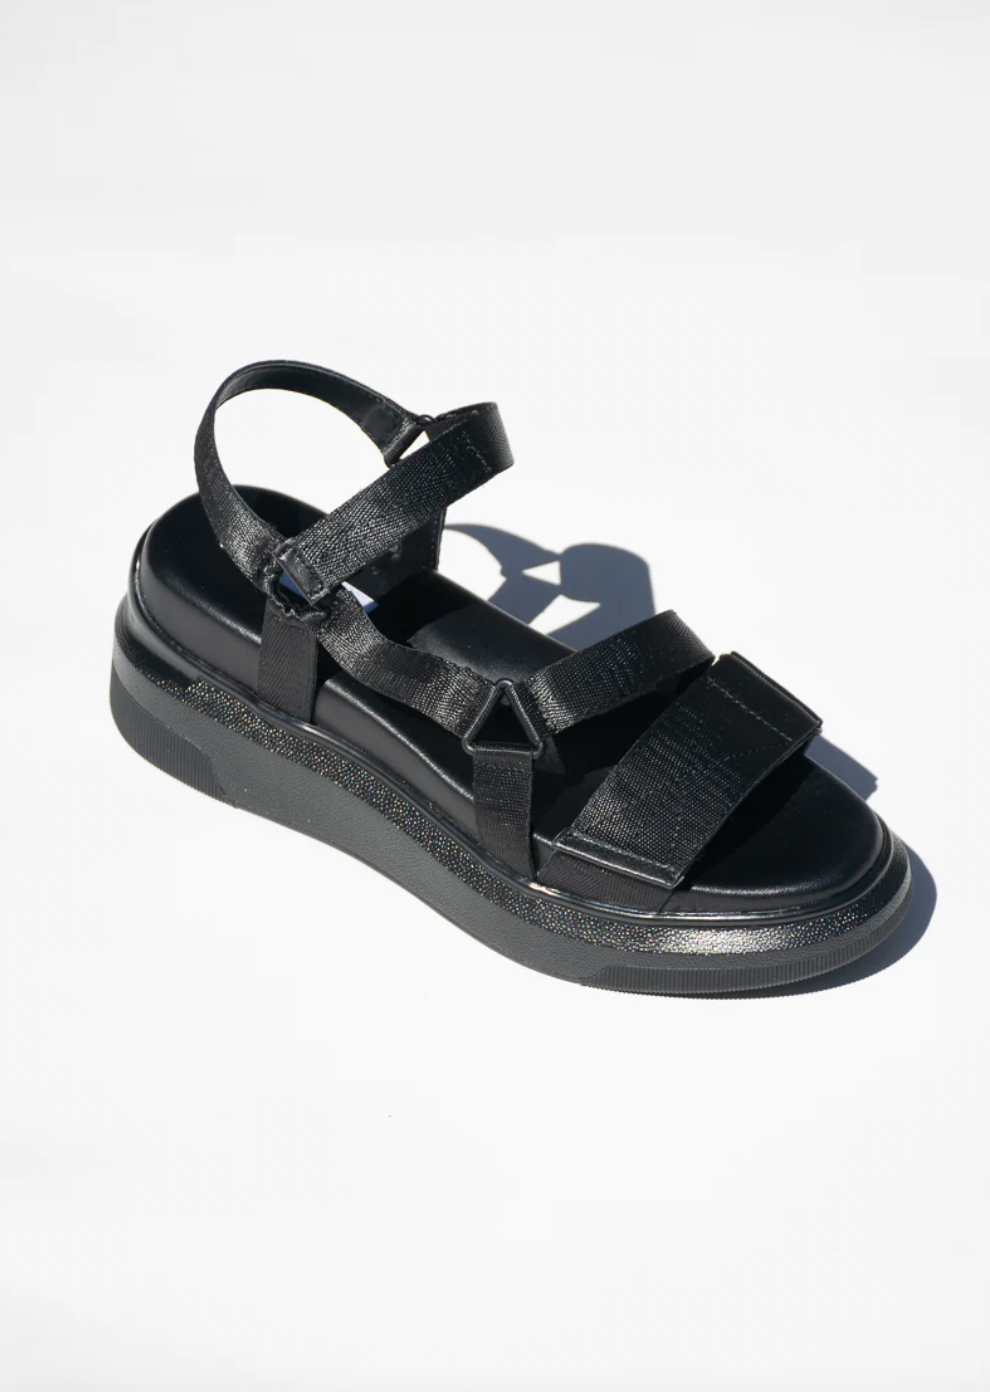 Product Image for Velcro Sandal, Black